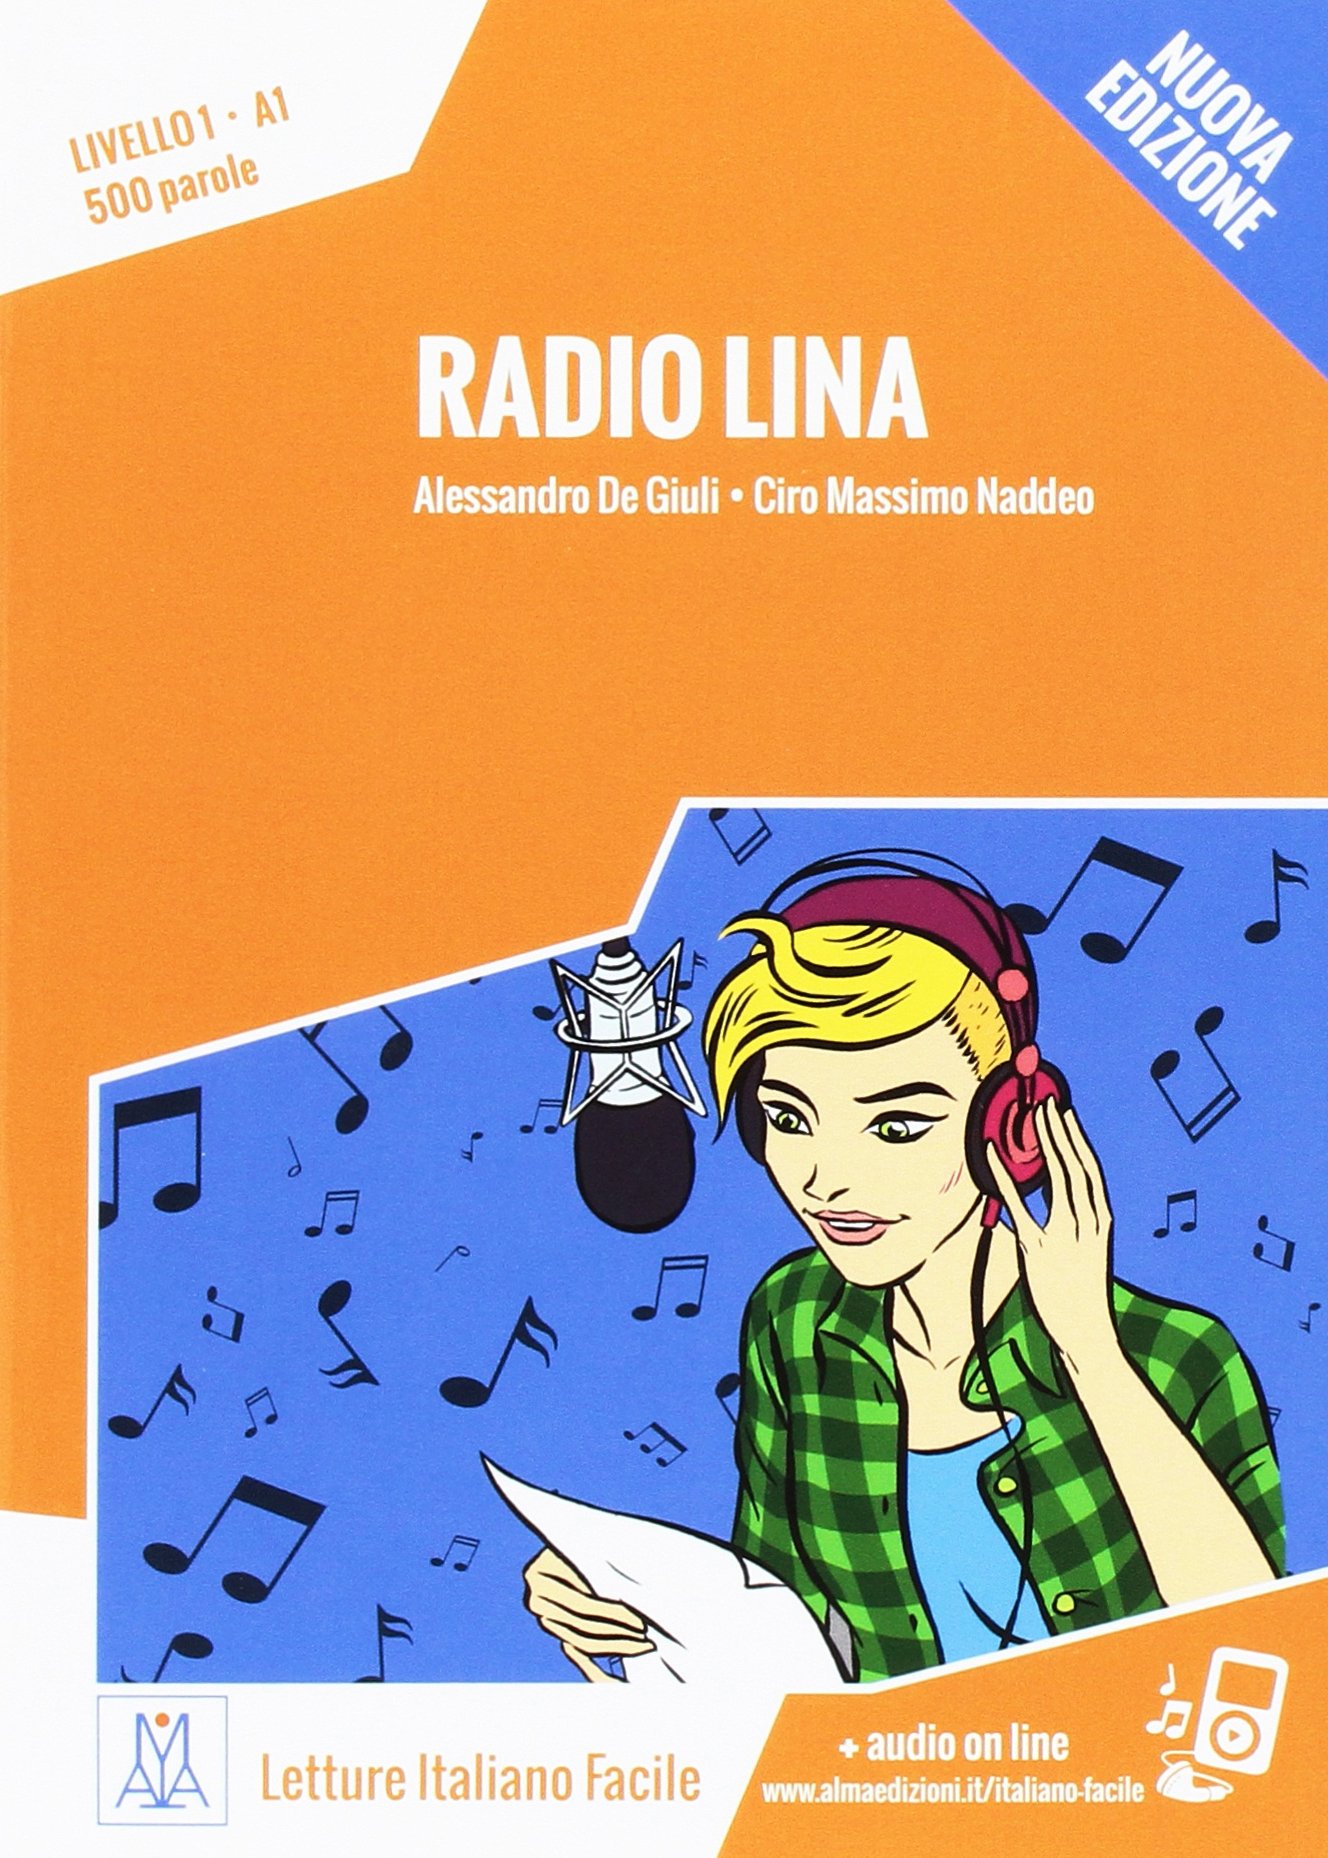 IFA 1: RADIO LINA